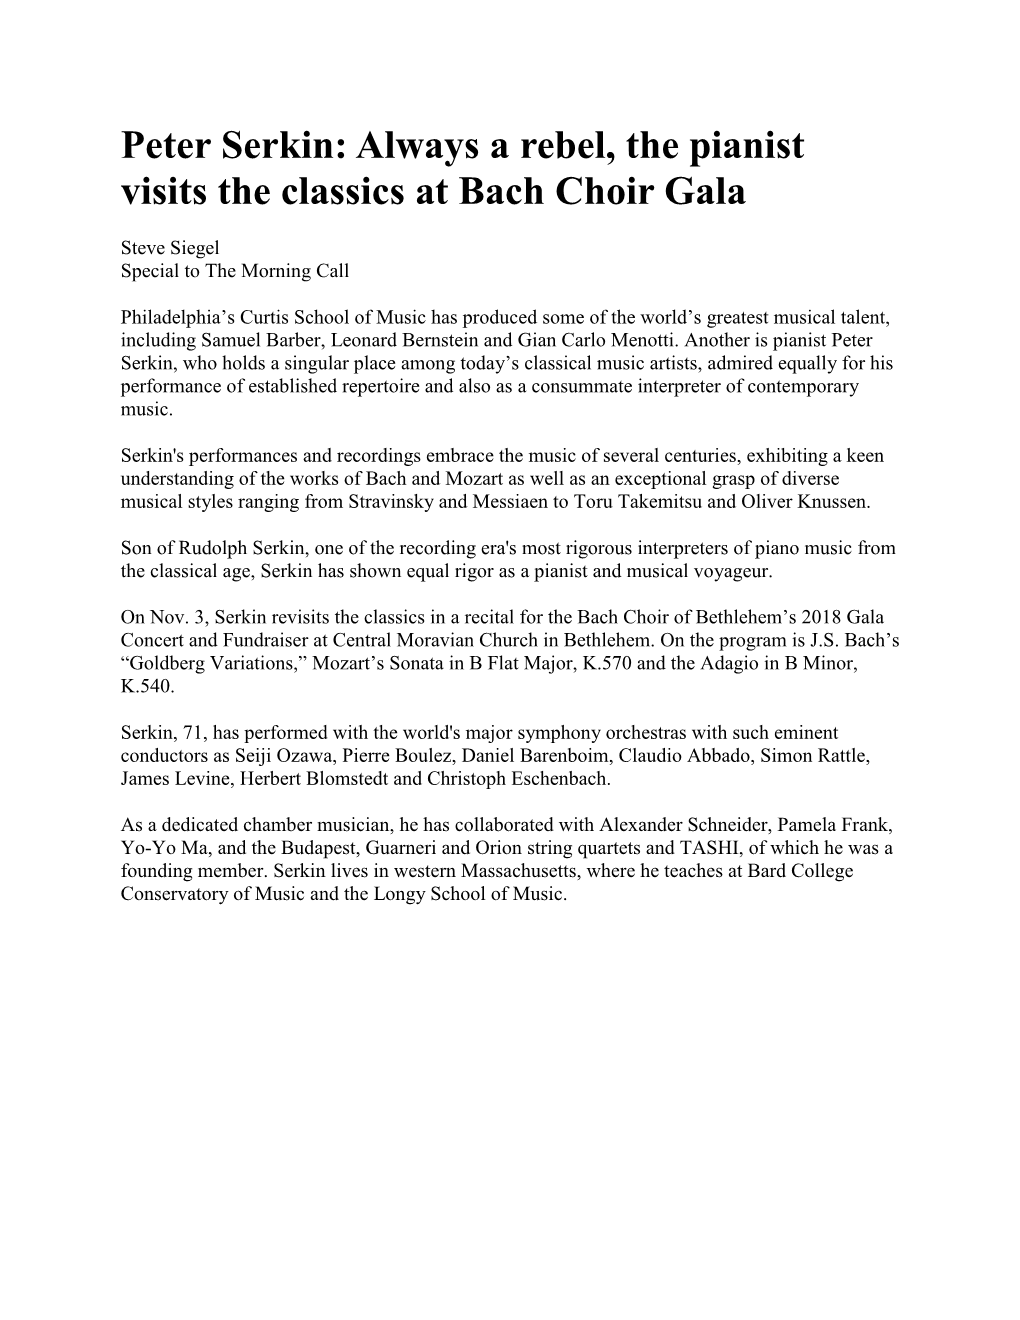 Peter Serkin: Always a Rebel, the Pianist Visits the Classics at Bach Choir Gala